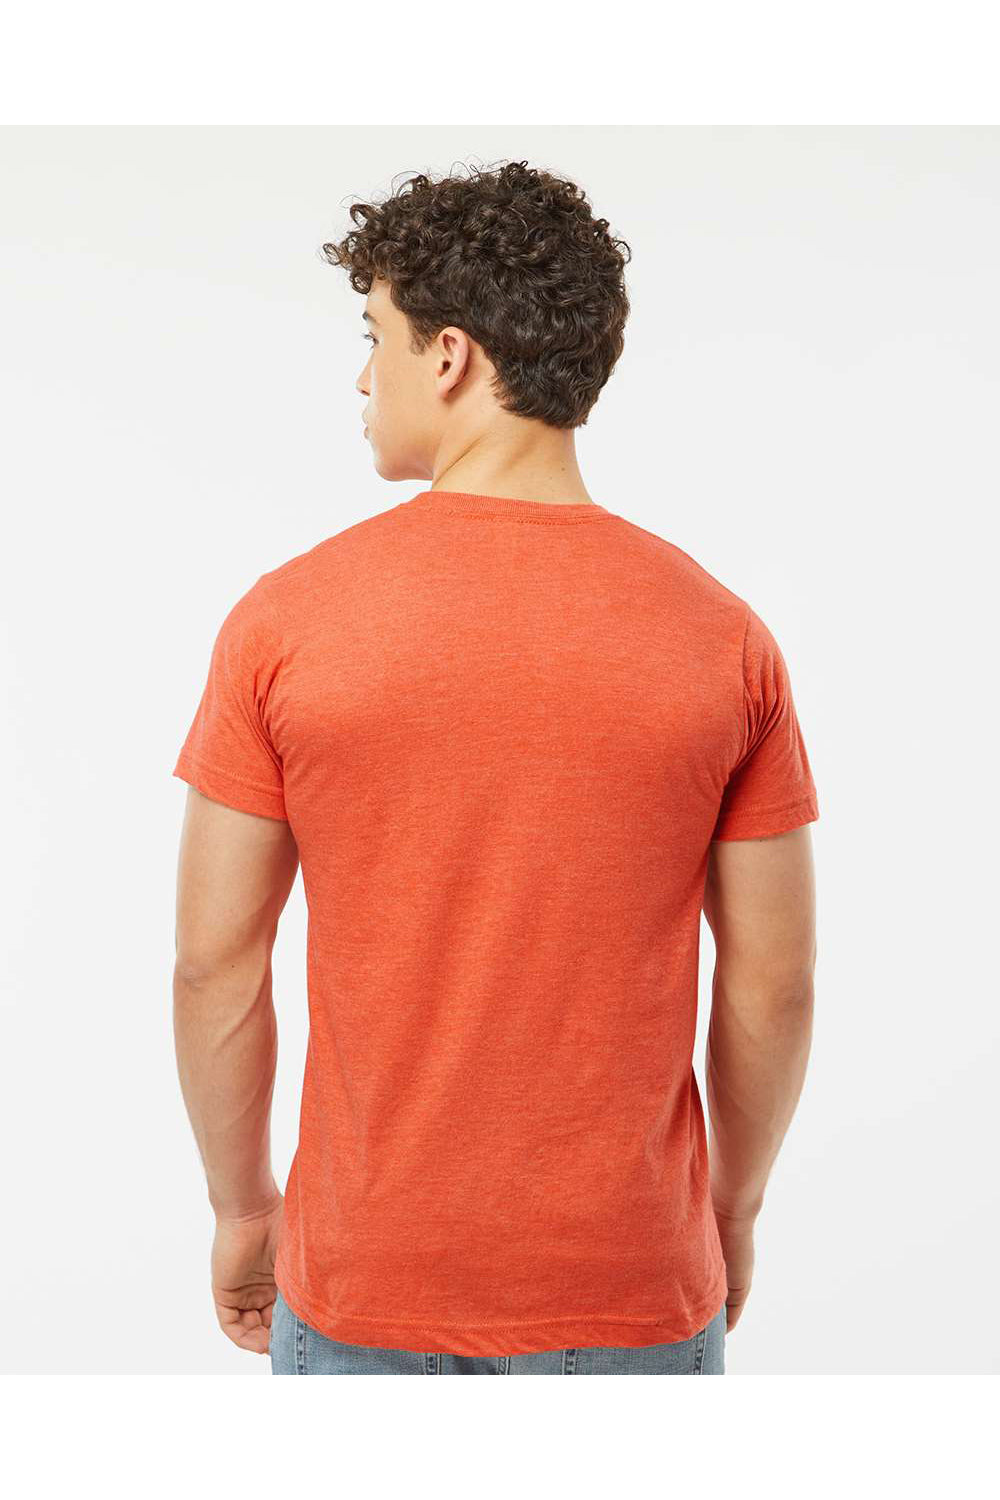 Tultex 202 Mens Fine Jersey Short Sleeve Crewneck T-Shirt Heather Orange Model Back